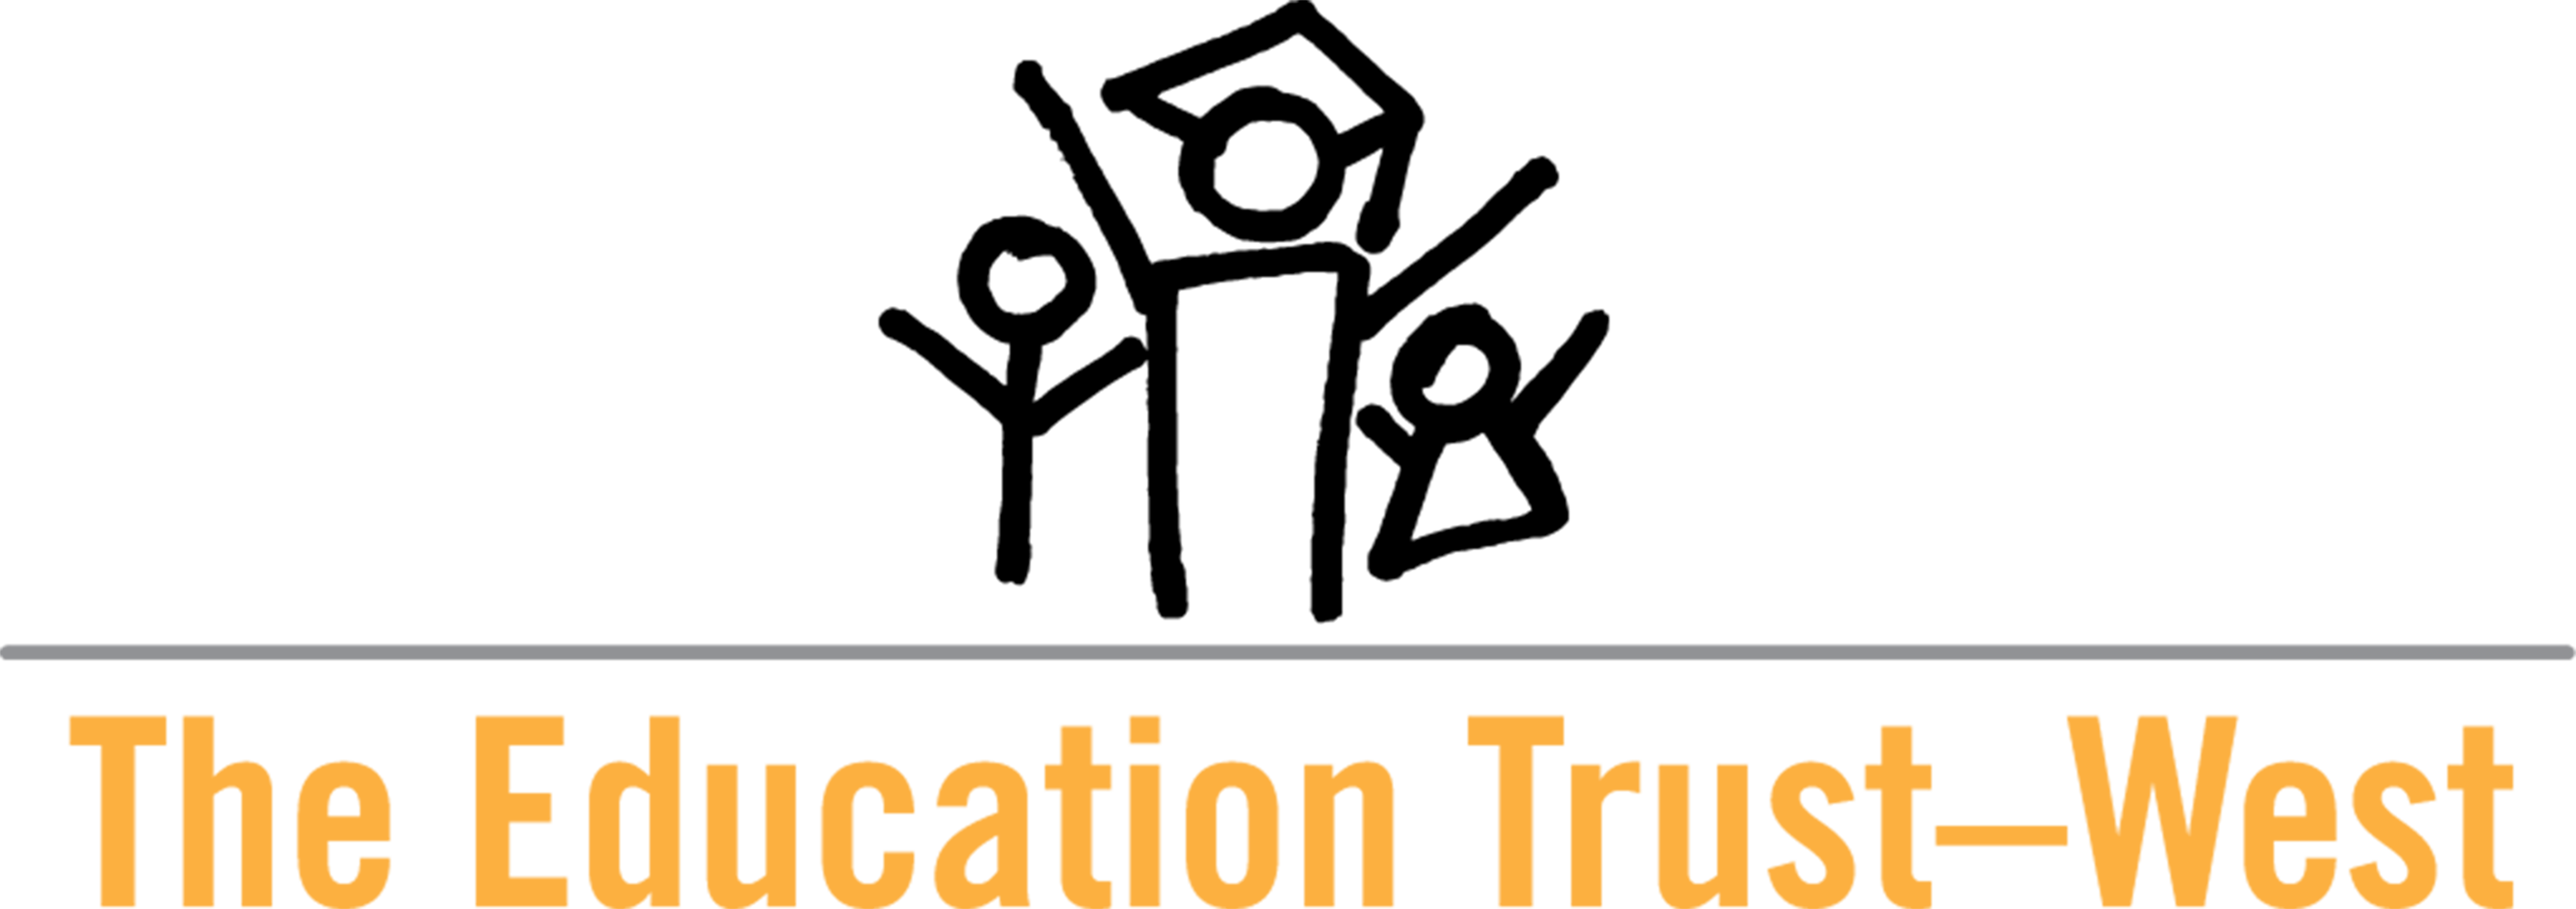 The Education Trust West logo